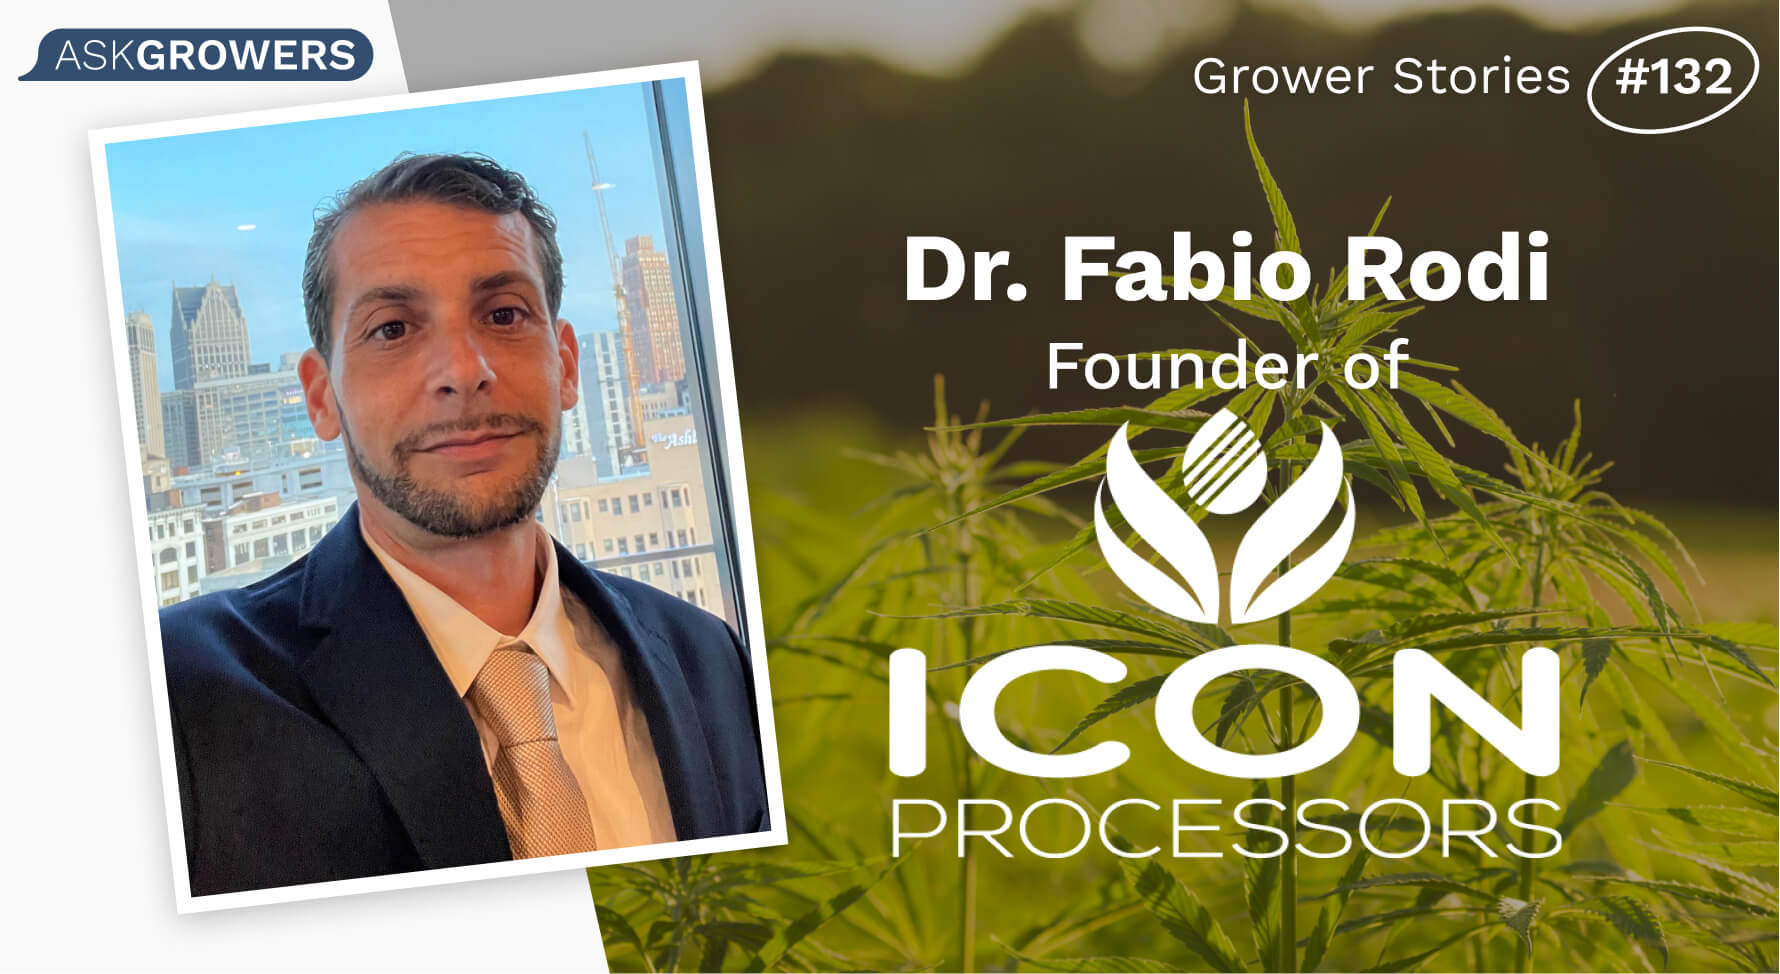 Grower Stories #132: Dr. Fabio Rodi